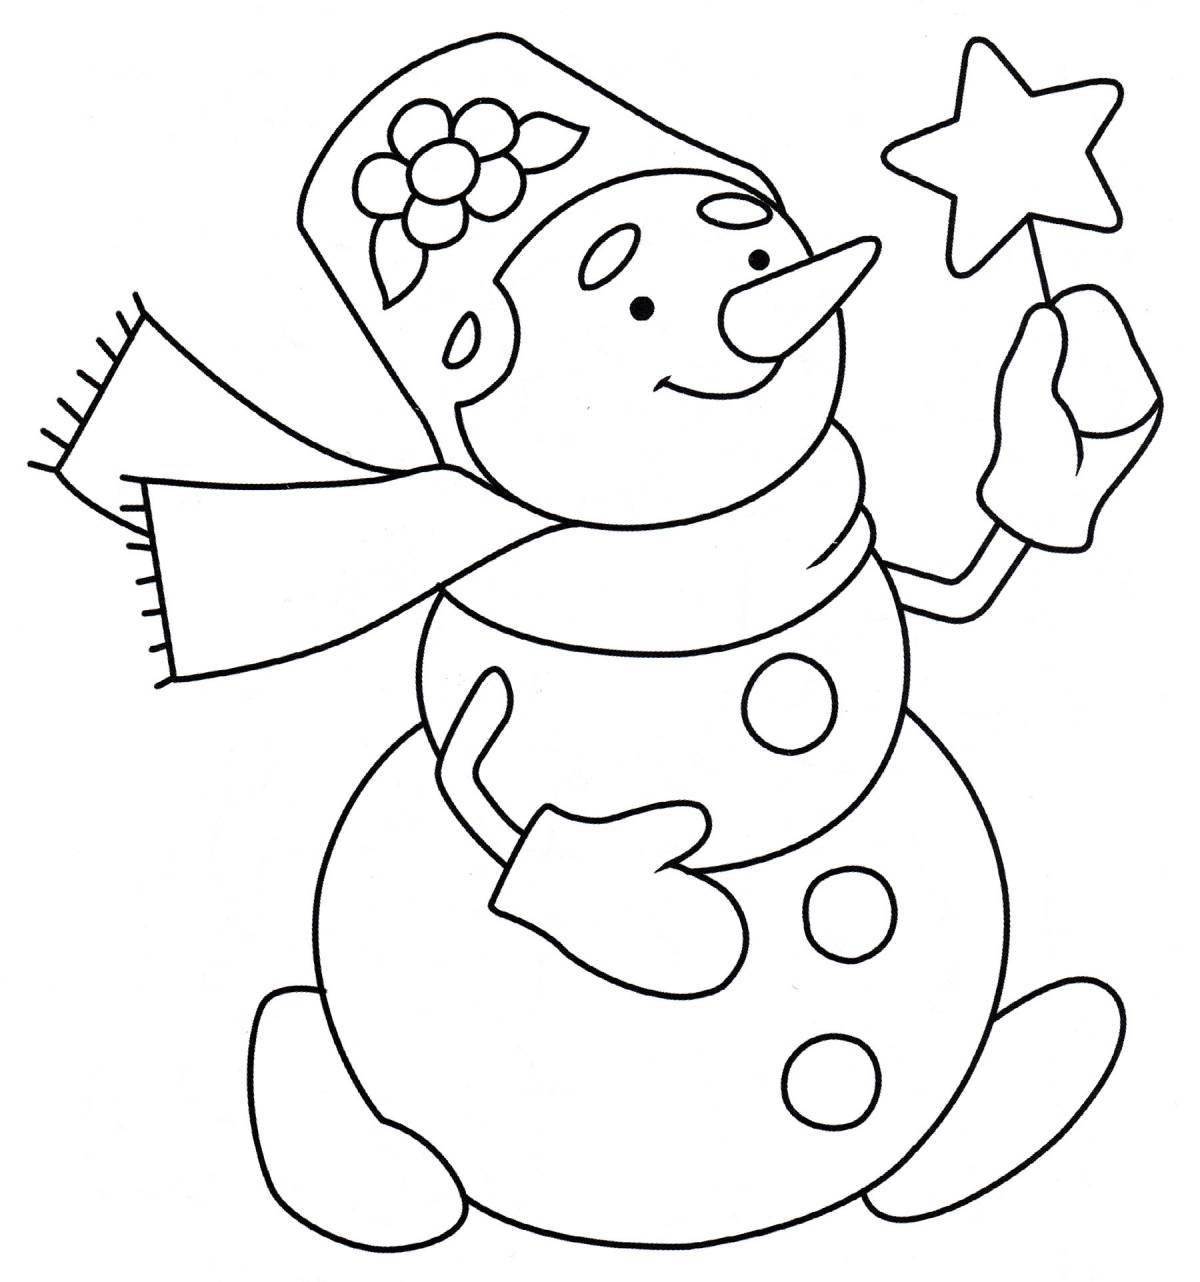 Children's cute snowman coloring book